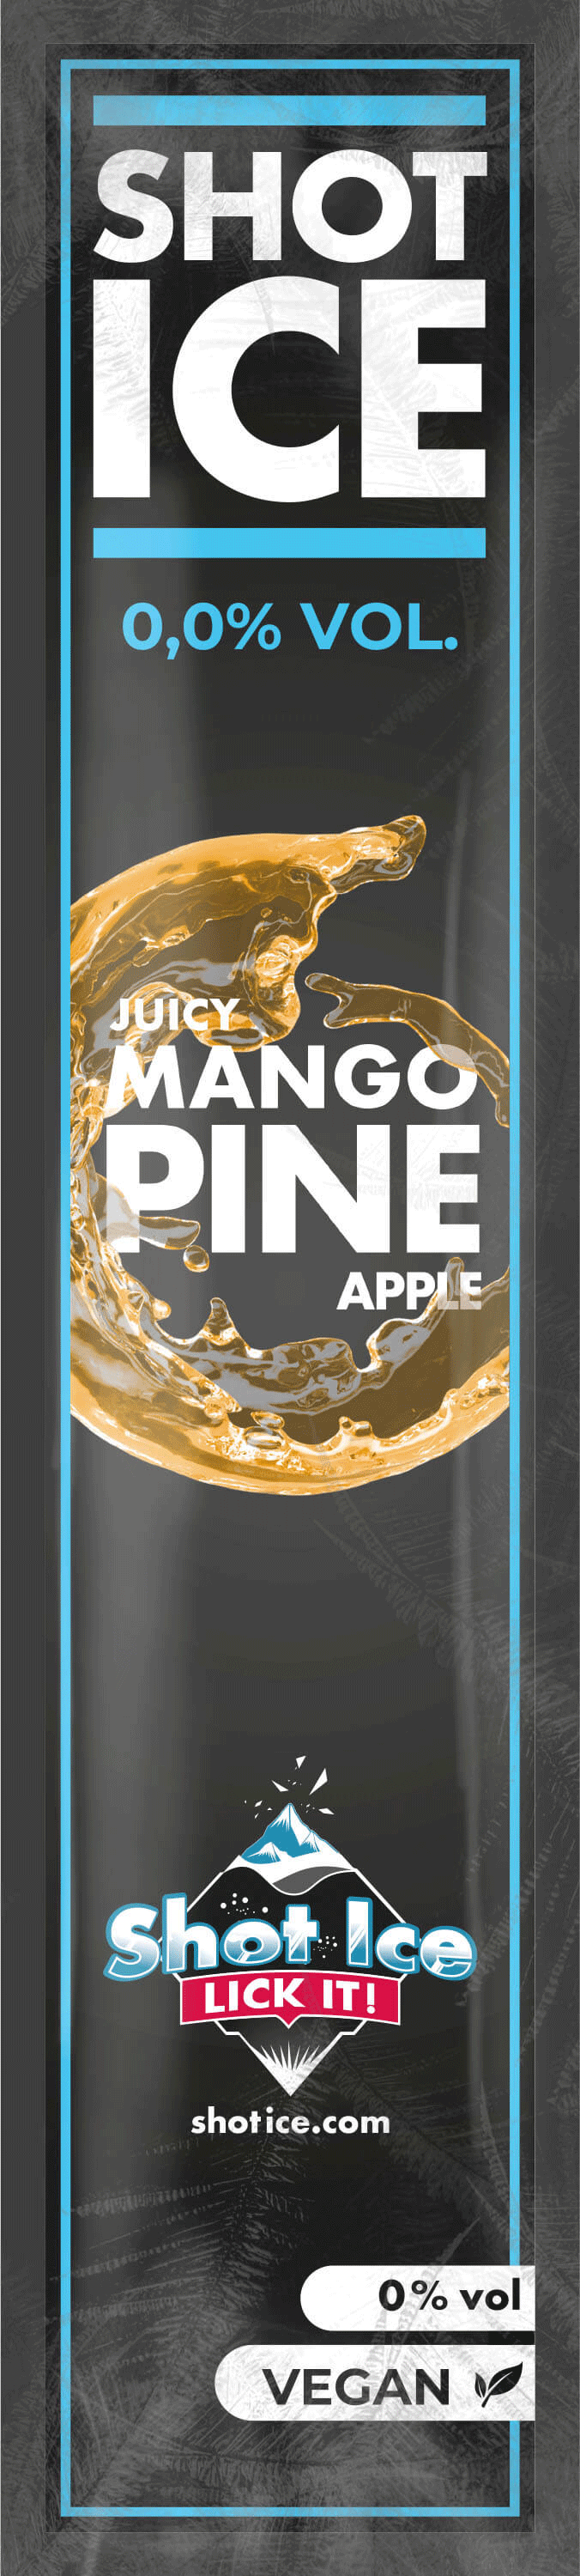 shotice-juicy-mango-pineapple